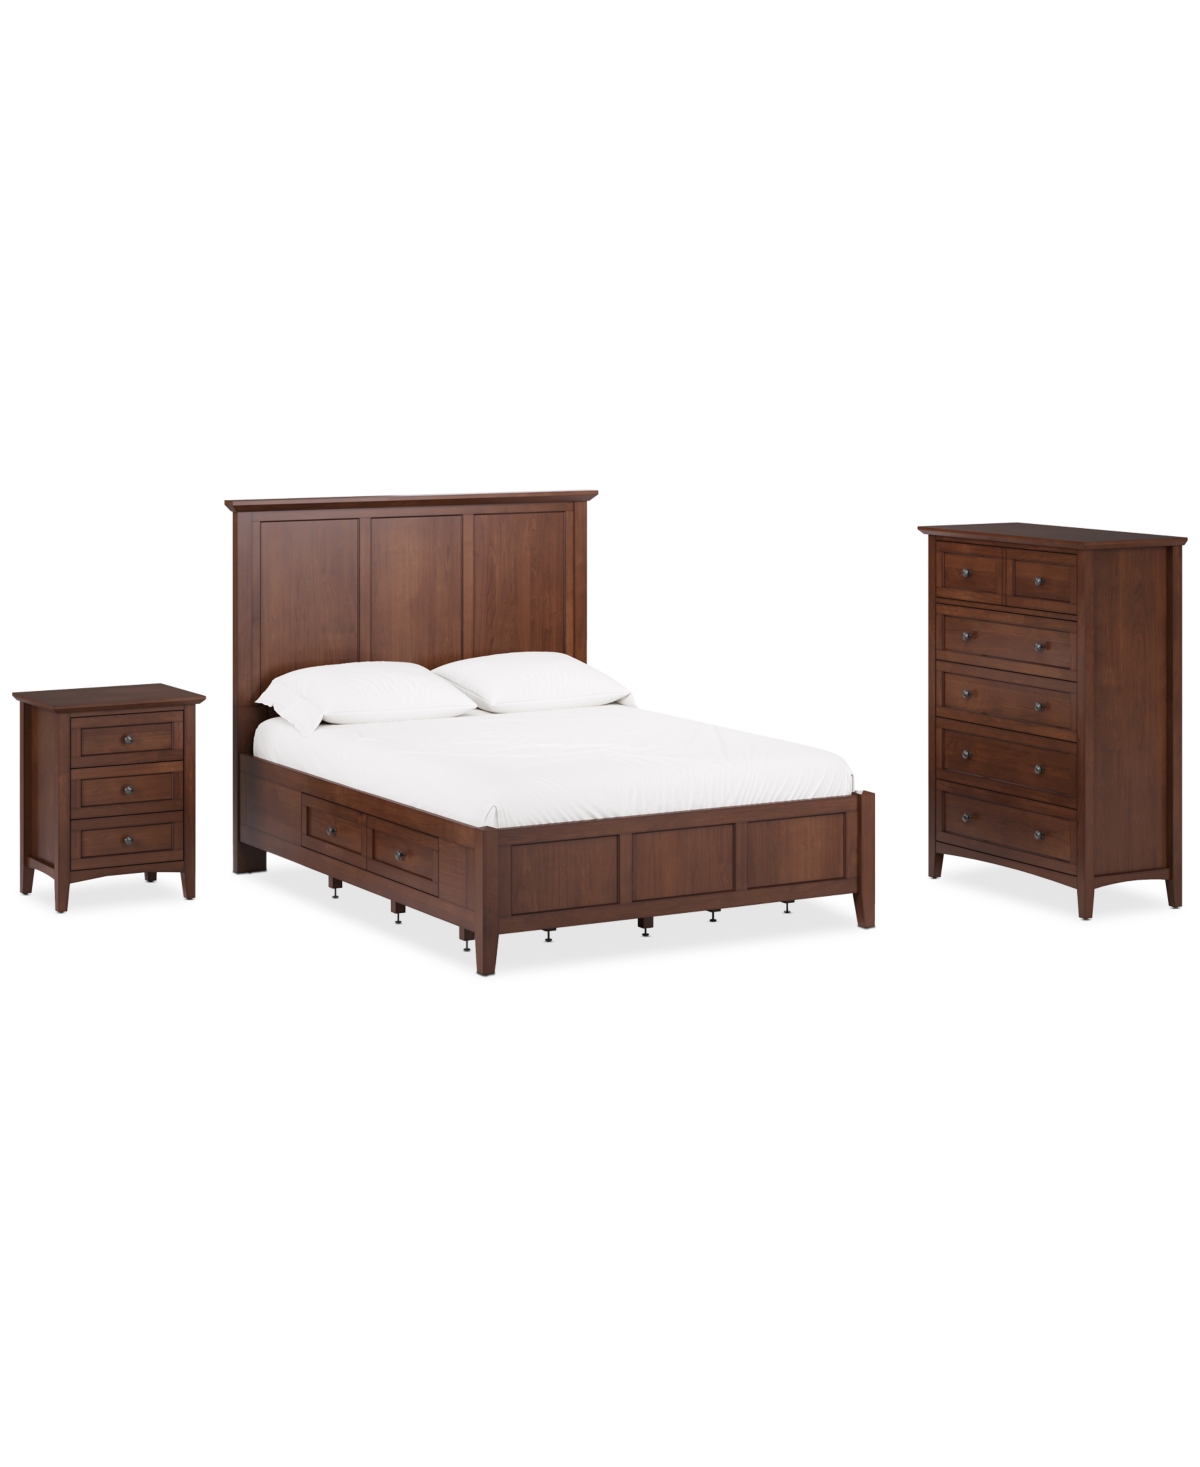 Furniture Hedworth Queen Storage Bed 3pc Set (queen Storage Bed + Chest + Nightstand) In Brown